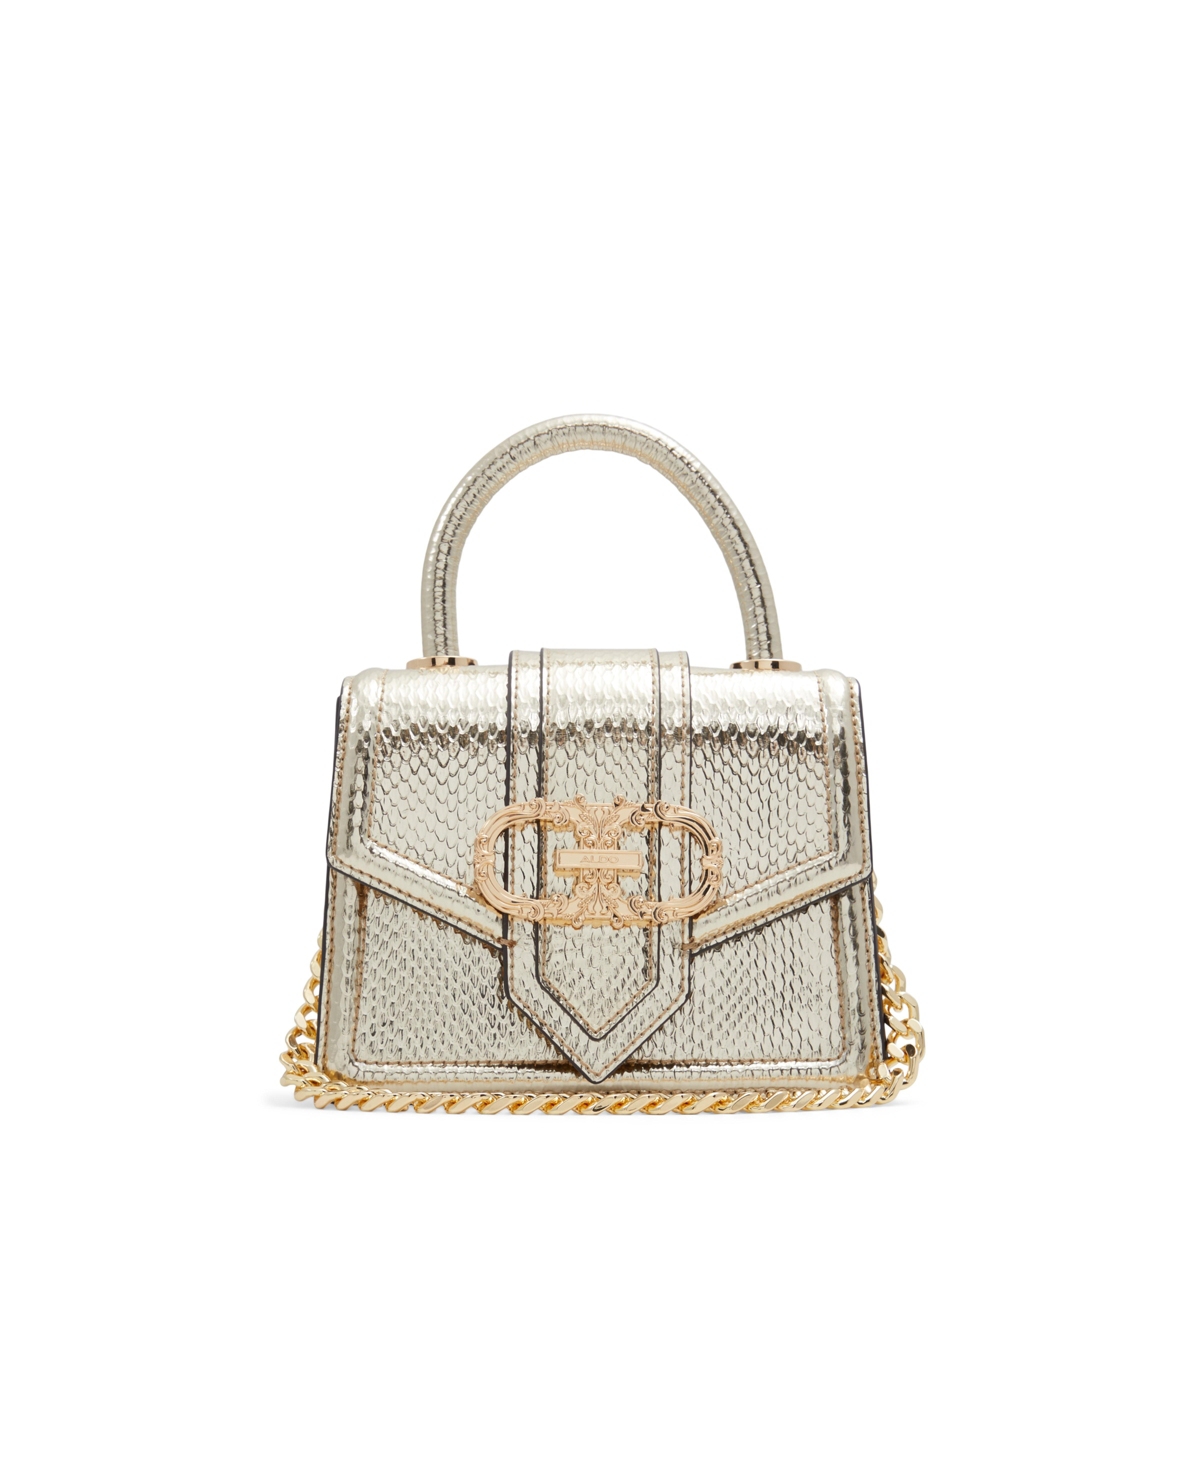 Theodoraa Women's City Handbags - Gold